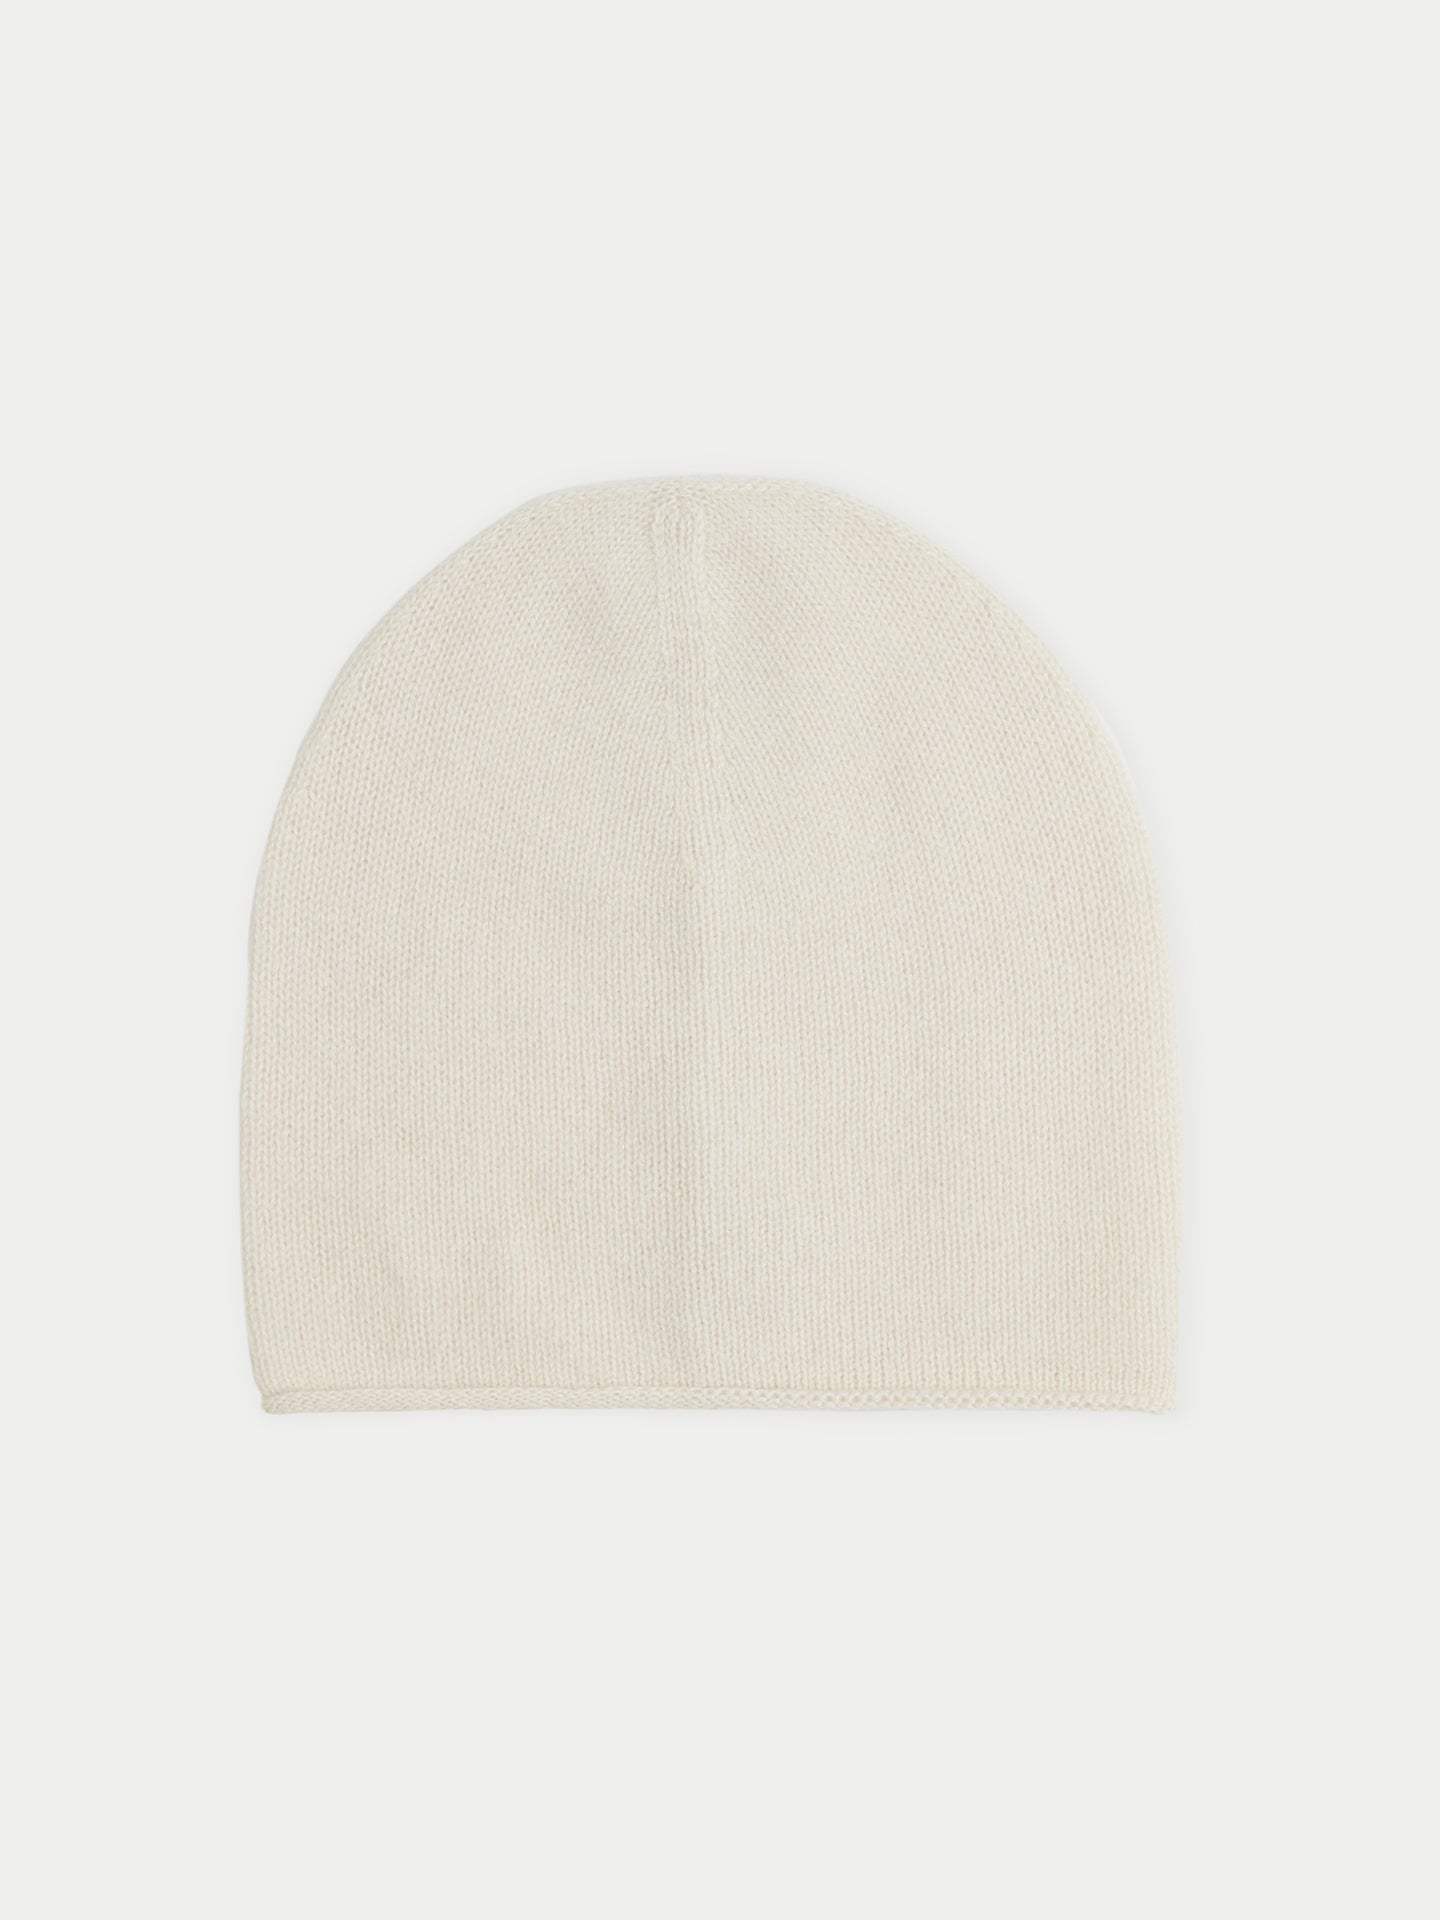 Women's Cashmere $99 Hat & Sweater Off White - Gobi Cashmere